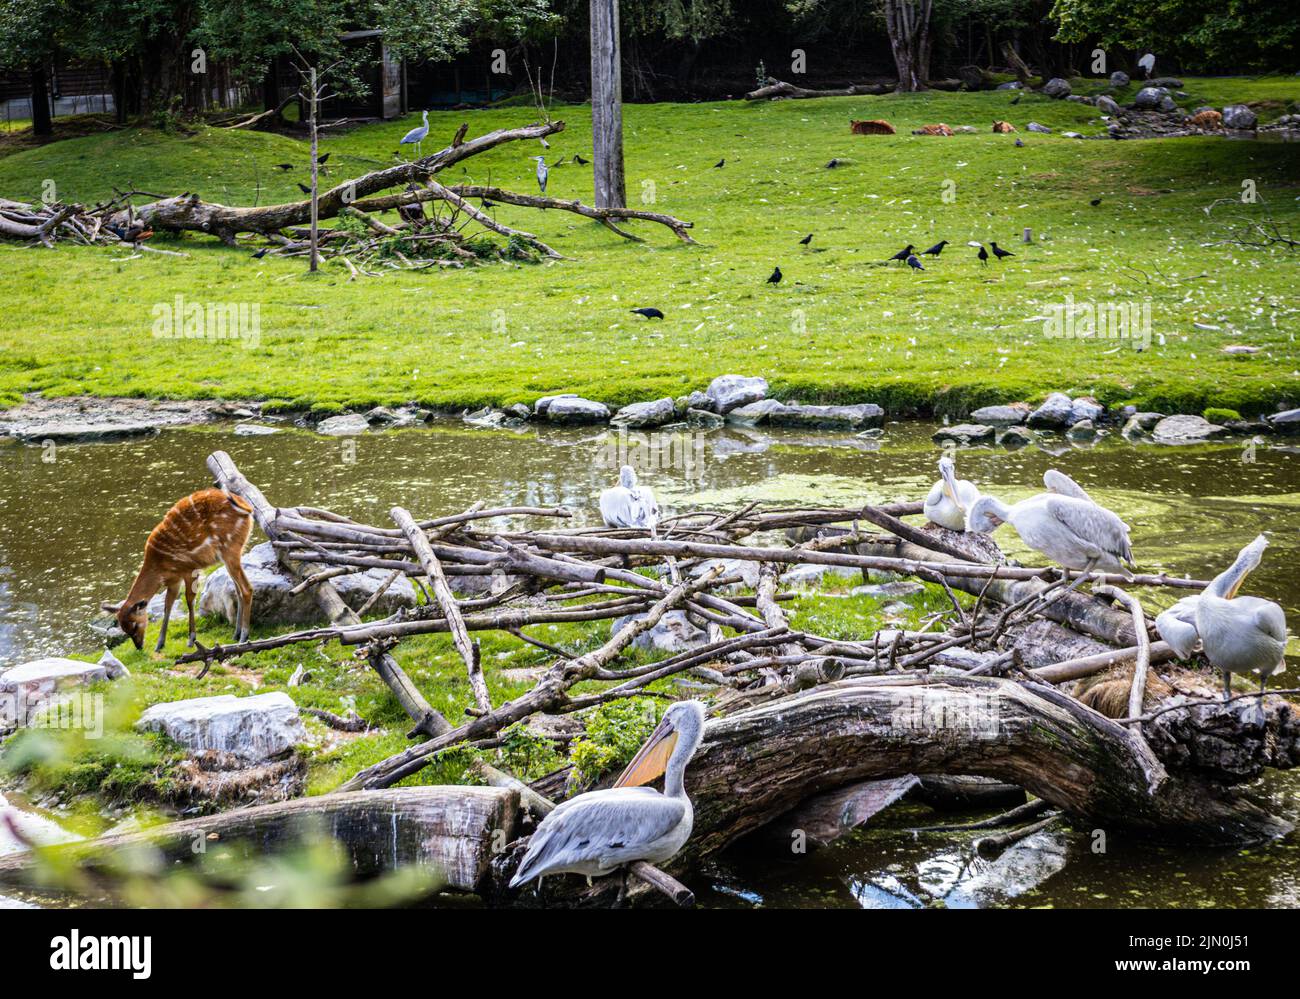 Pink-backed pelican / Pelecanus rufescens and Sitatunga / Tragelaphus spekii gratus around a watering hole Stock Photo